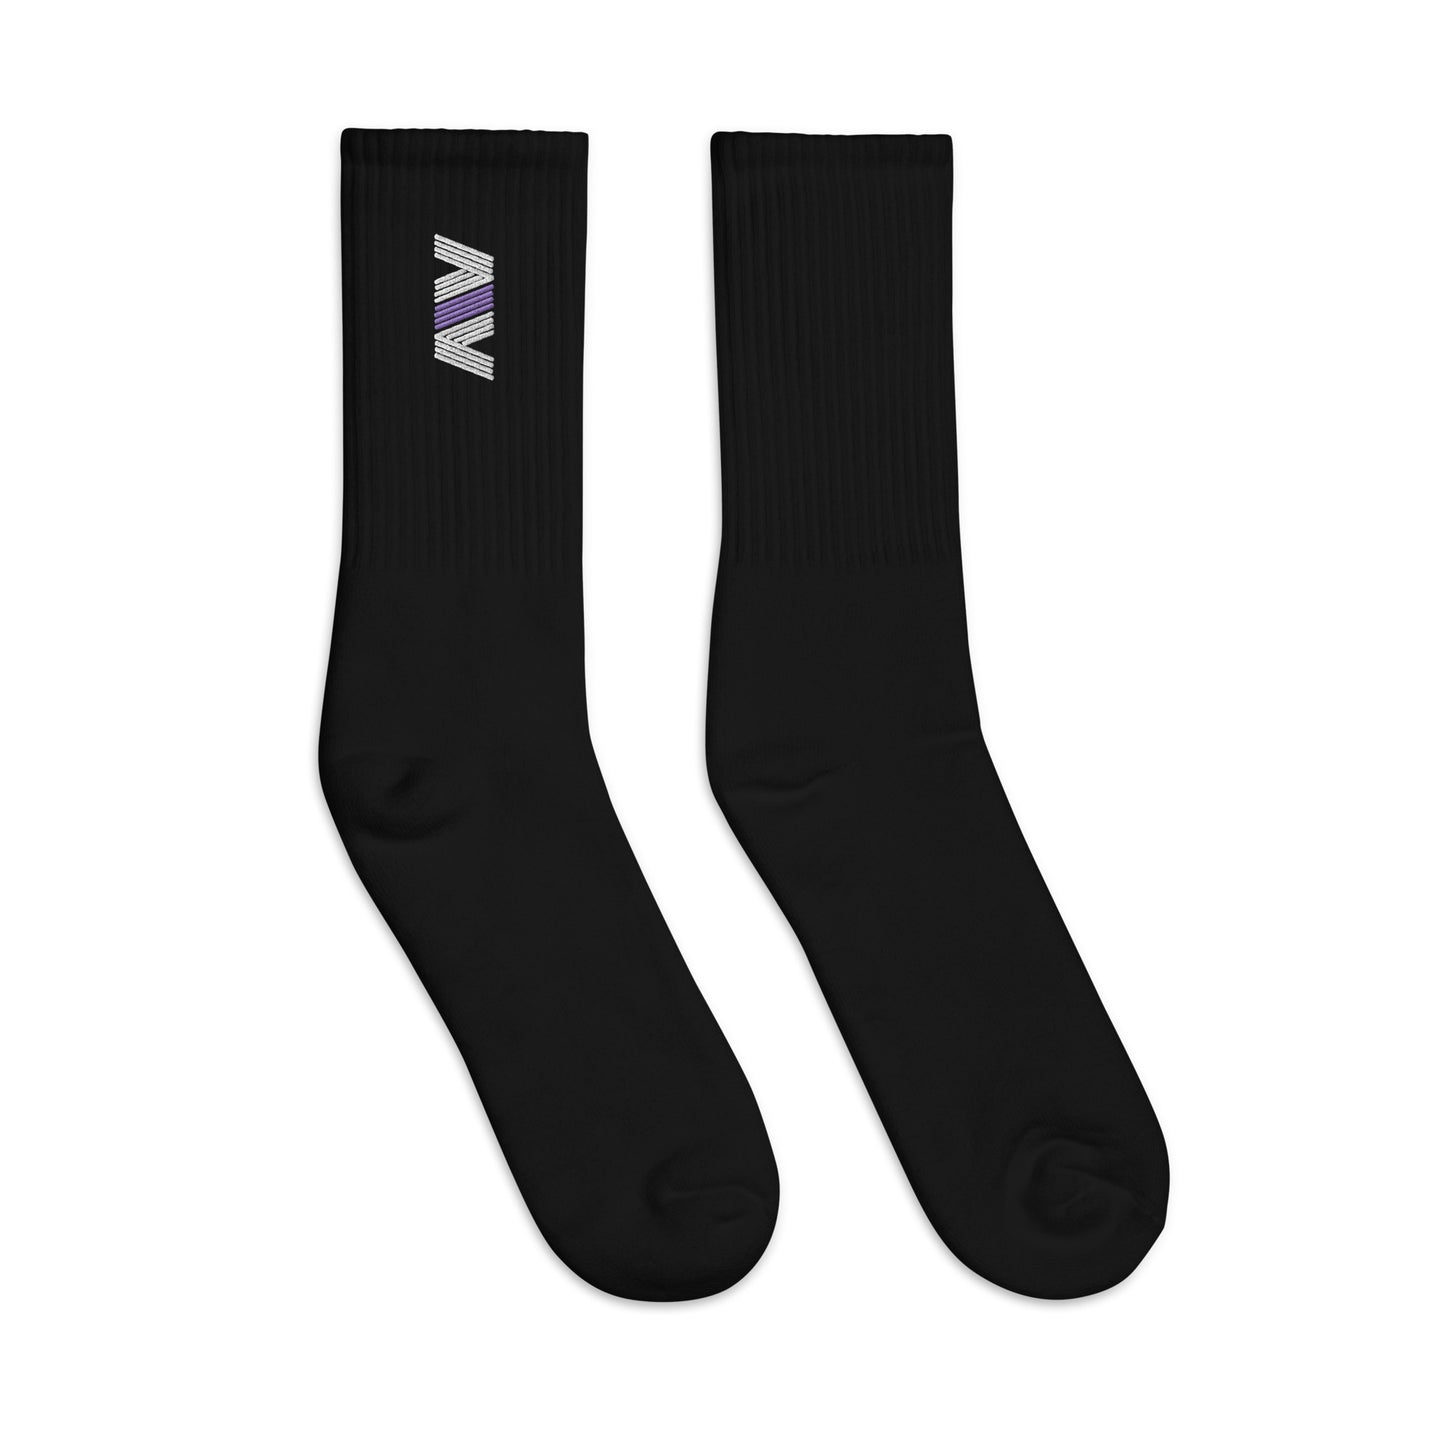 A4 Socks - Black